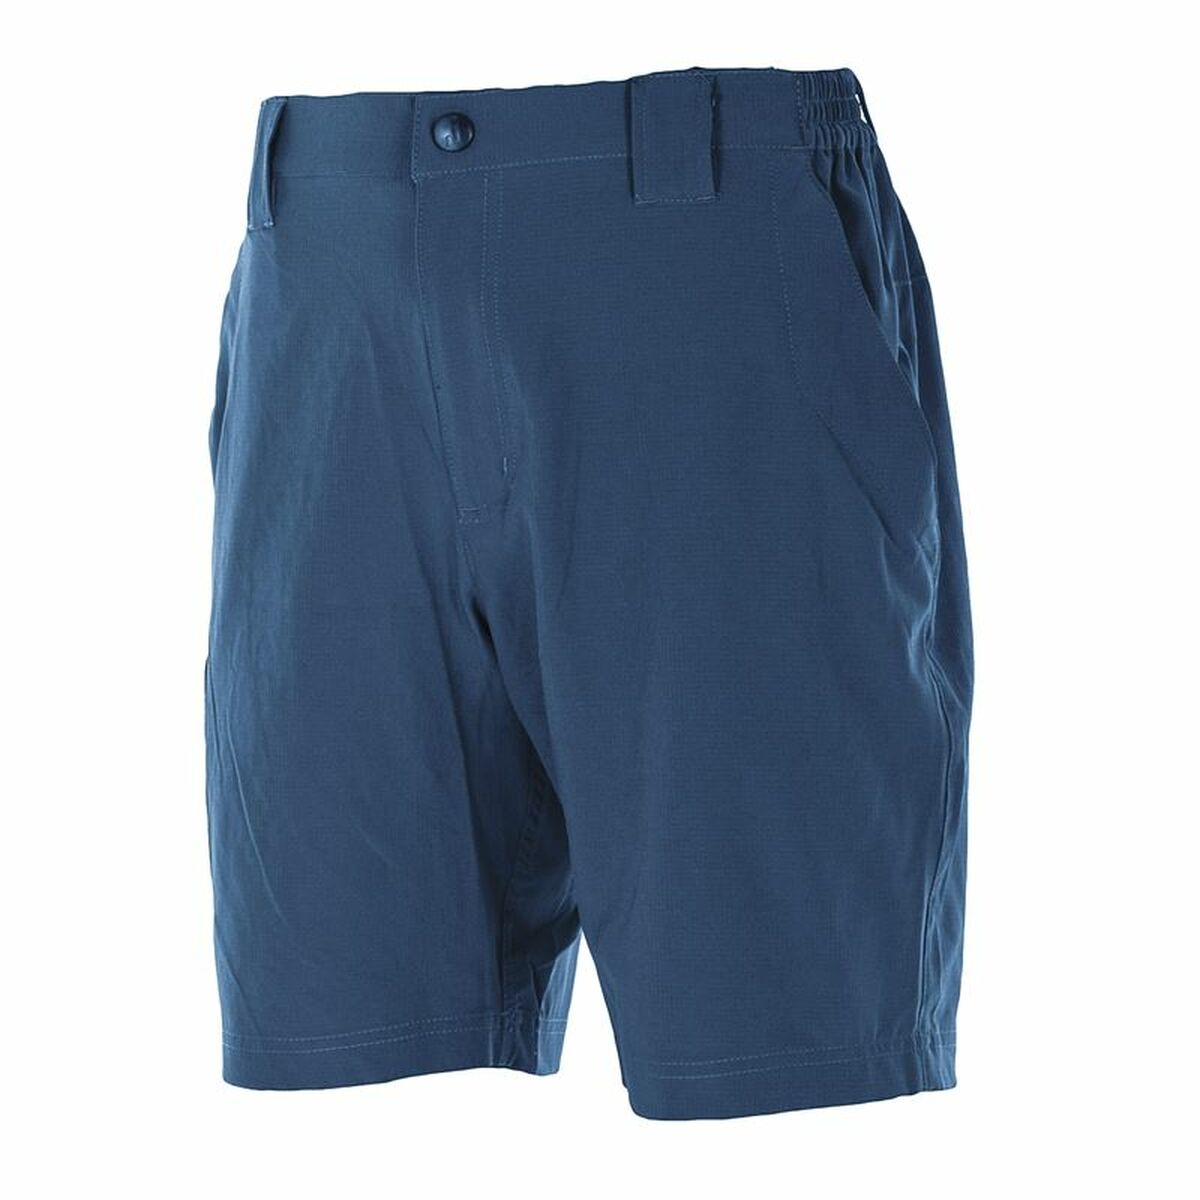 Pantalones Cortos Deportivos para Hombre Joluvi Rips Azul